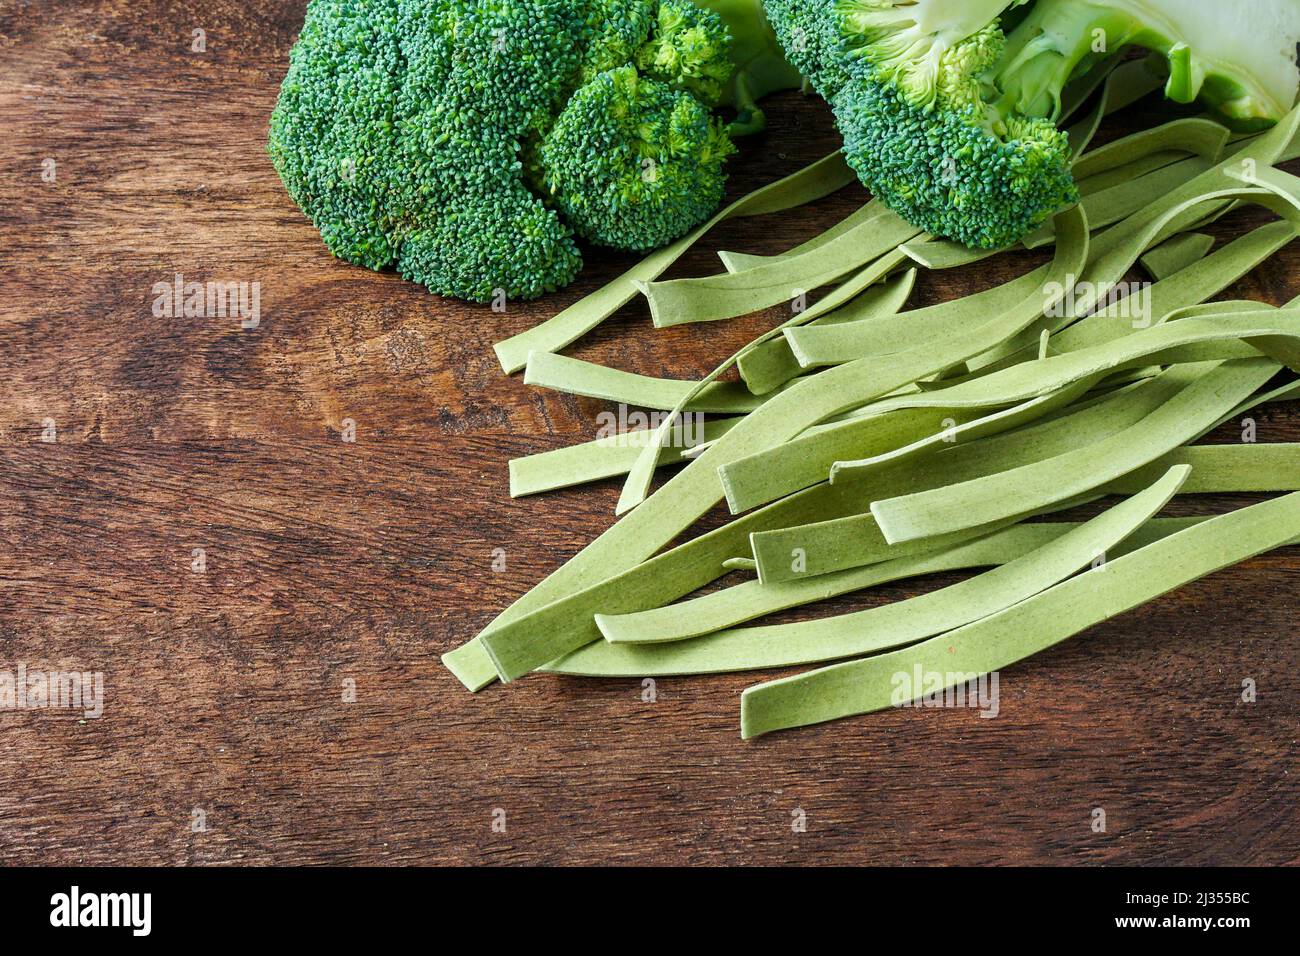 Artisan healthy pasta made from broccoli. Stock Photo